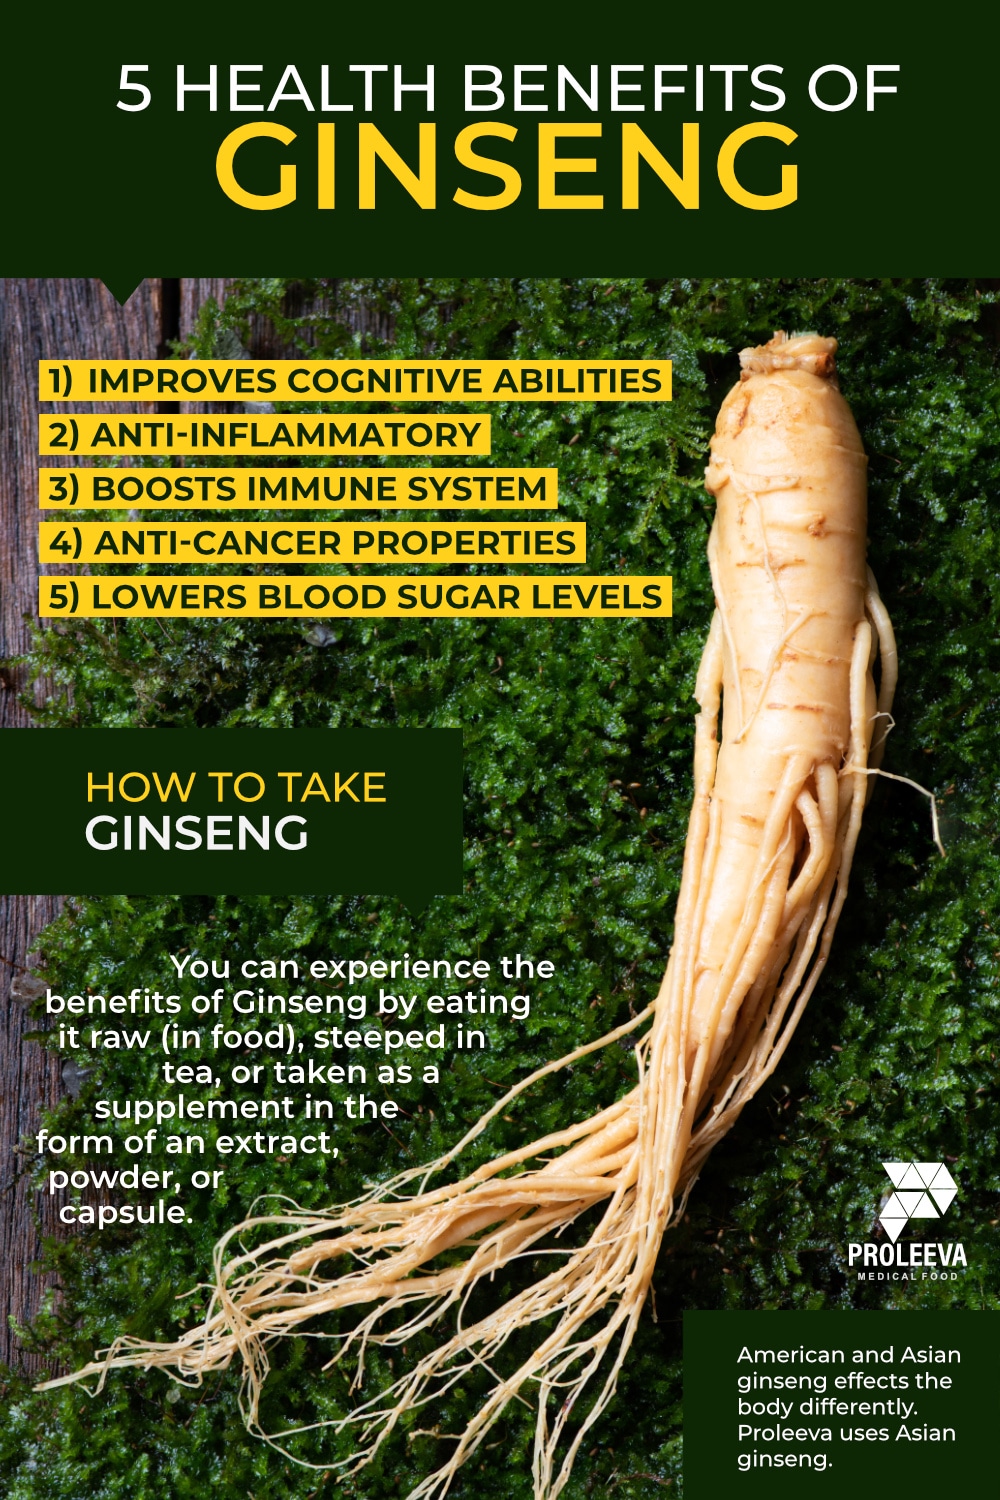 5 Health Benefits of Ginseng